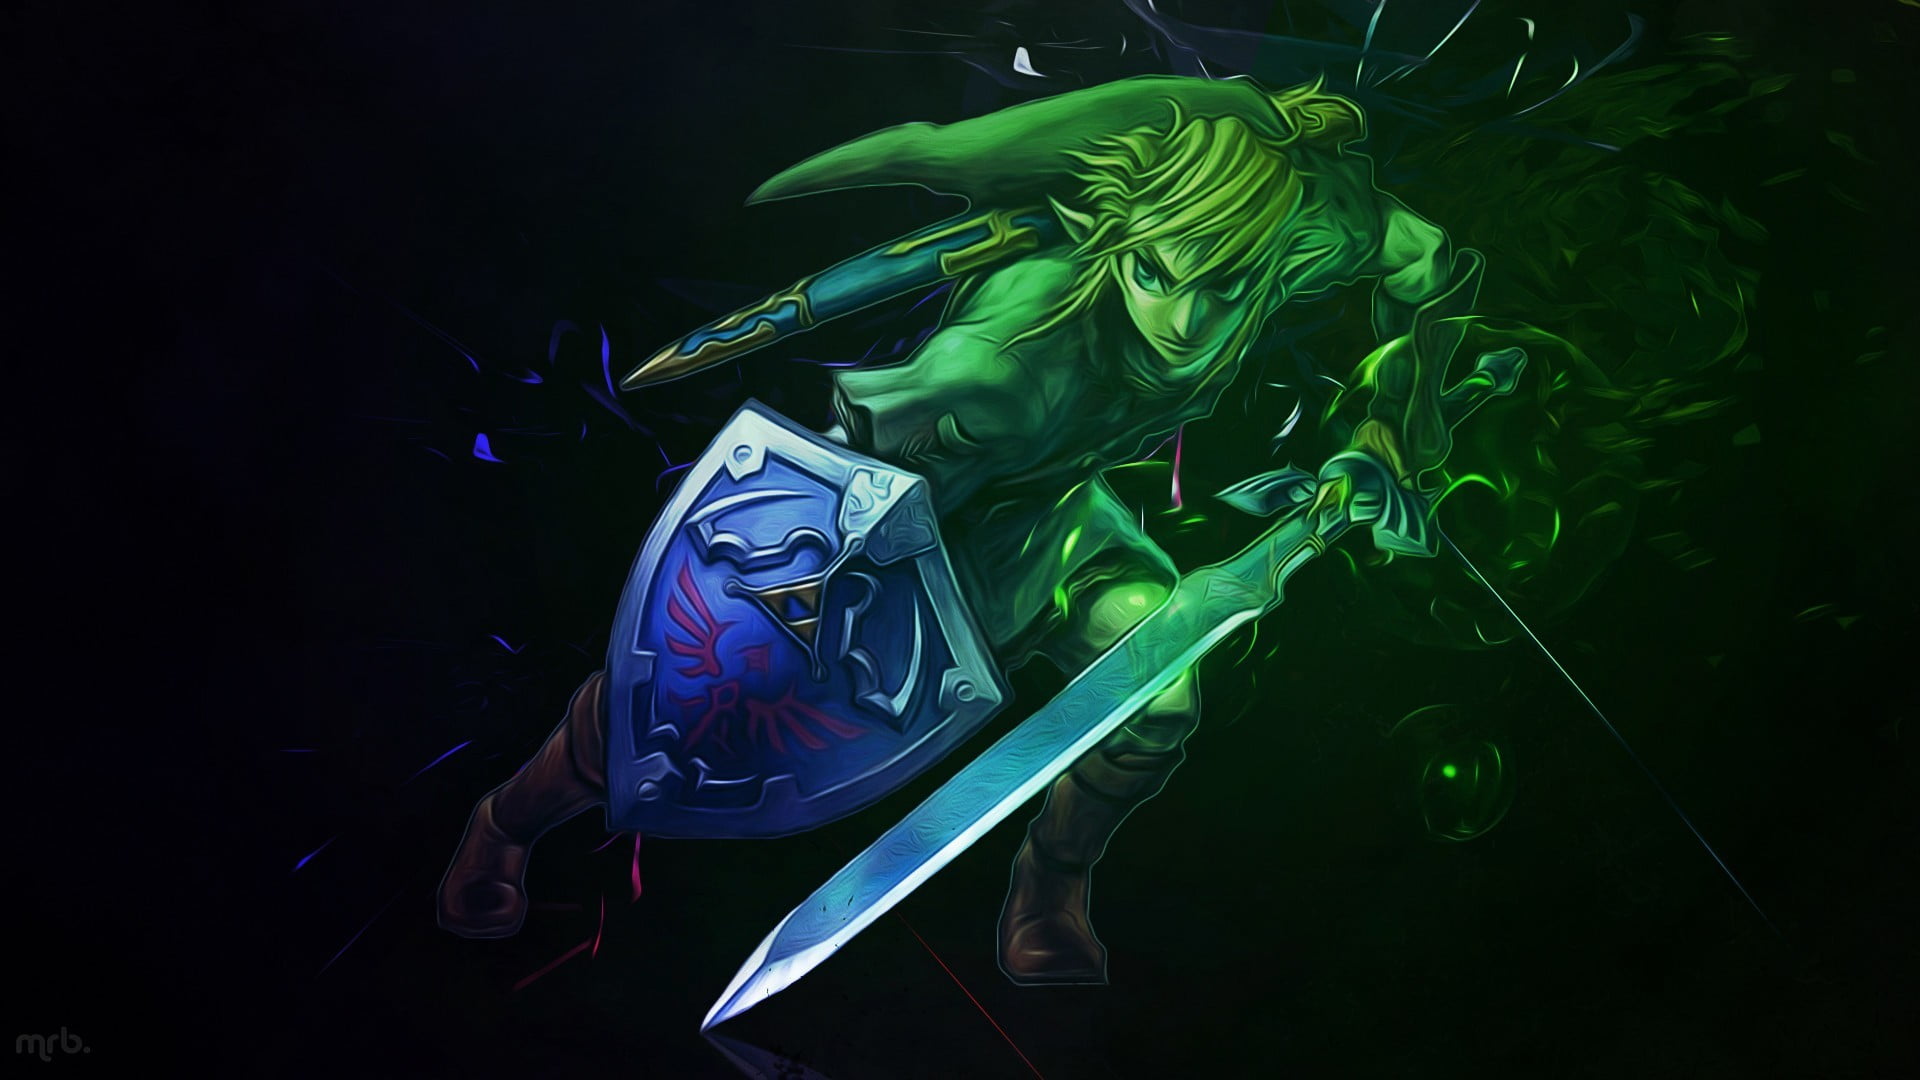 Link from Legend of Zelda wallpaper, The Legend of Zelda, Link, Hylian Shield, Master Sword